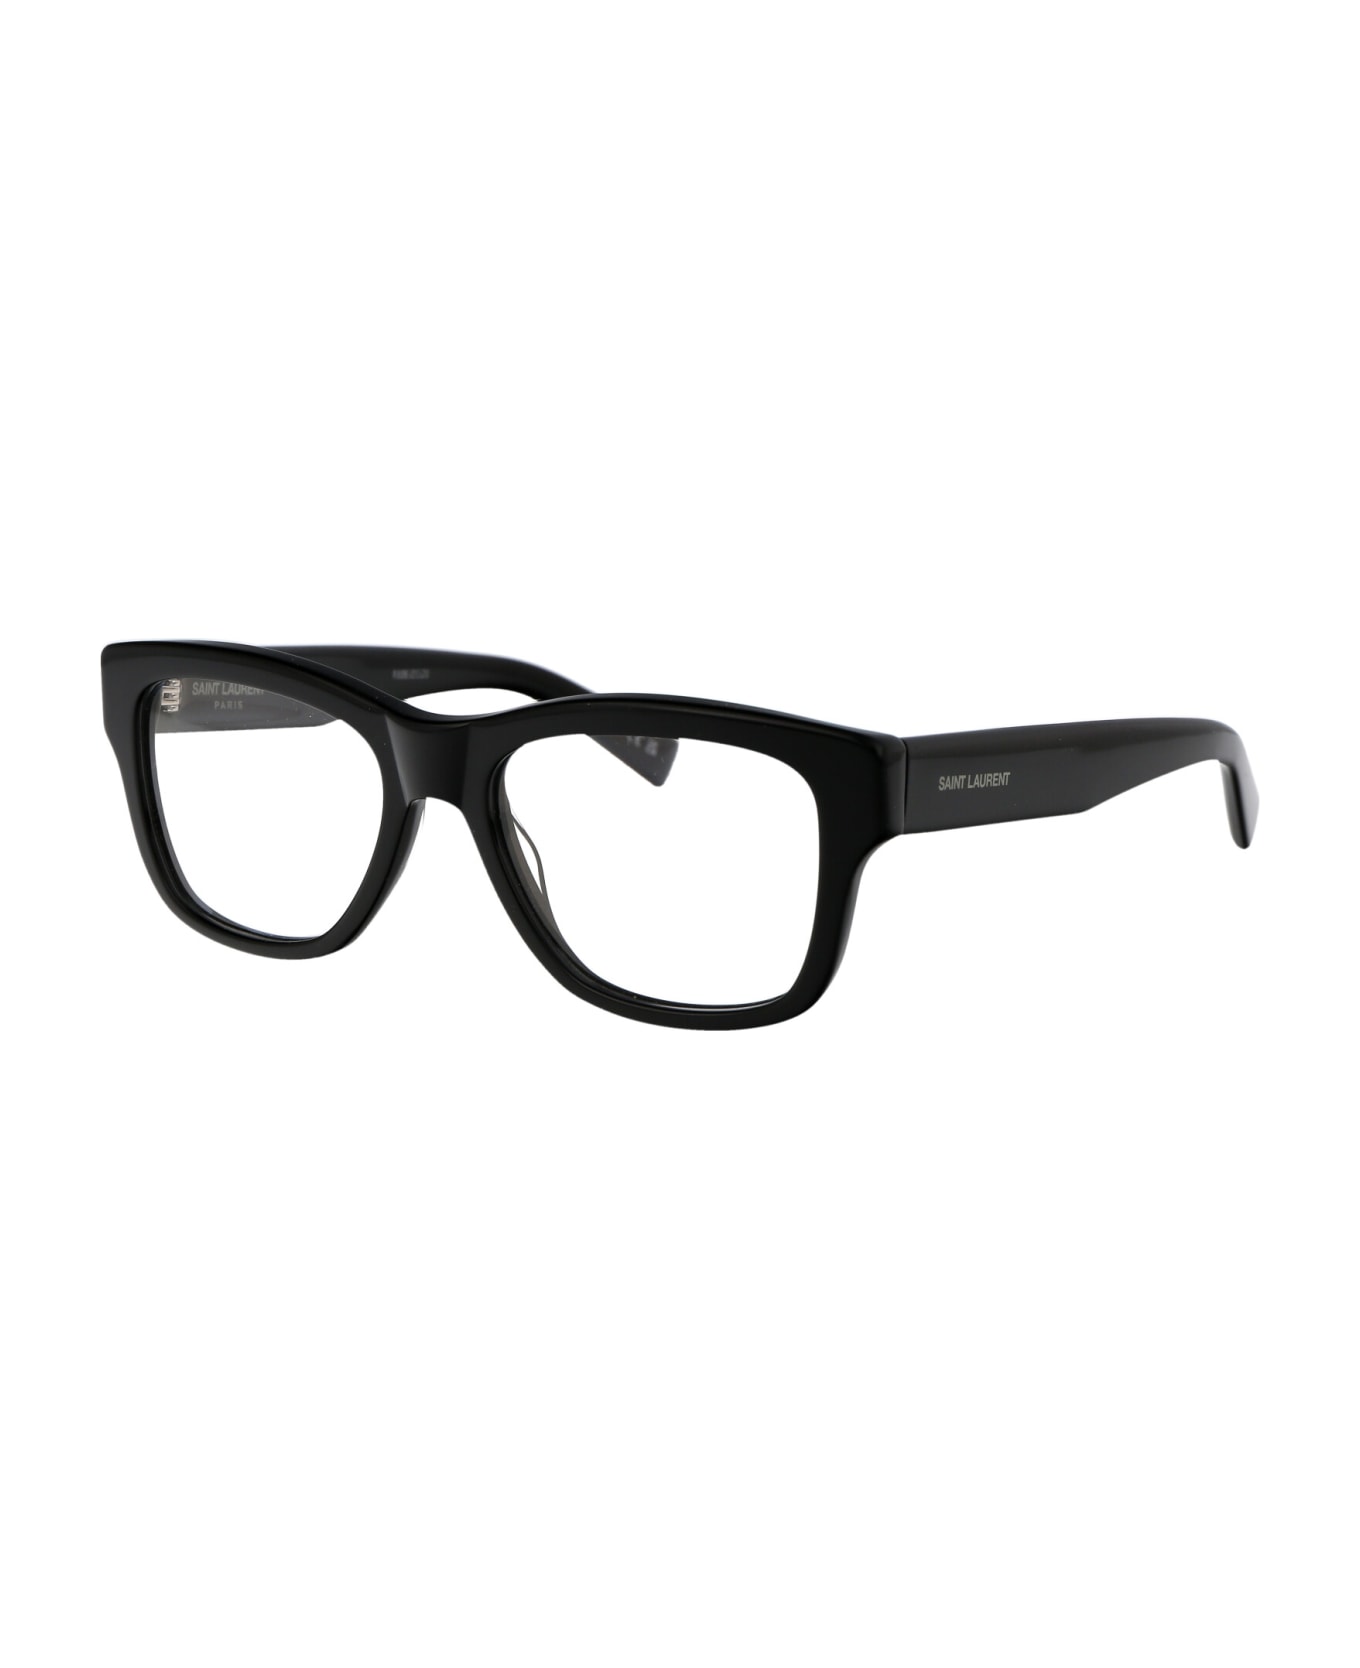 Saint Laurent Eyewear Sl 677 Glasses - 001 BLACK BLACK TRANSPARENT